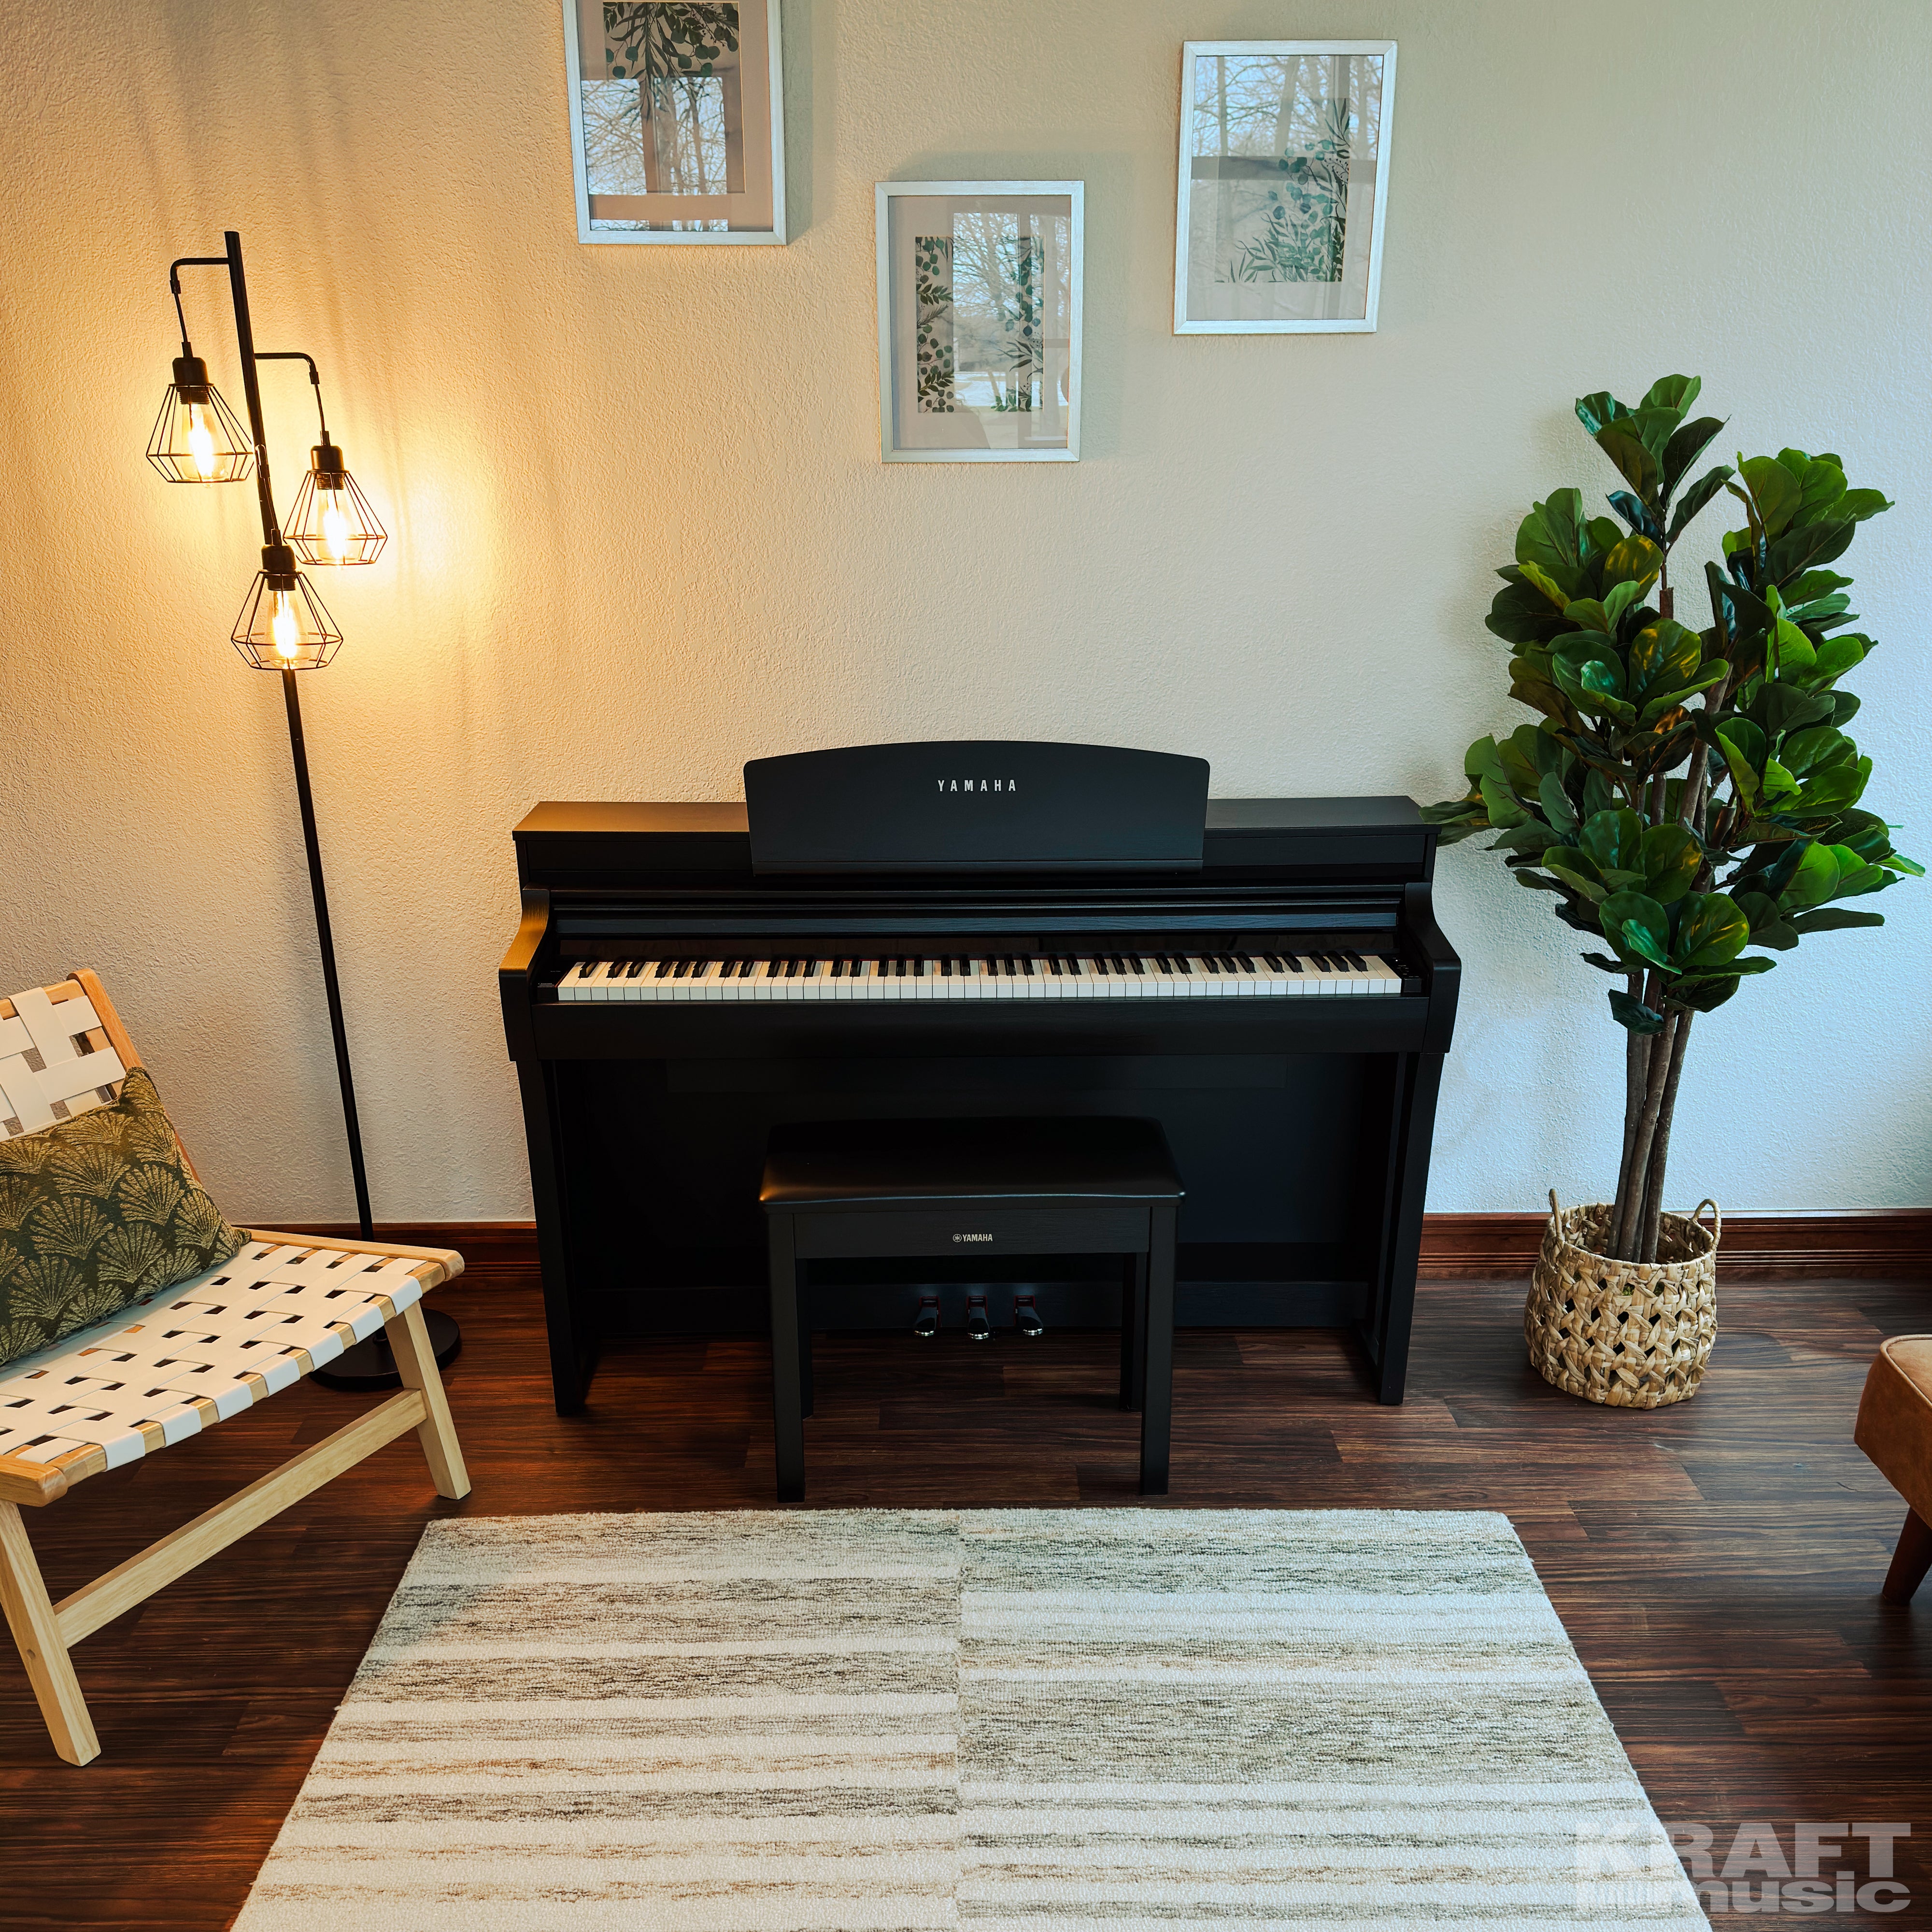 Yamaha Clavinova CSP-275 Digital Piano - Black Walnut - in a stylish living room front view